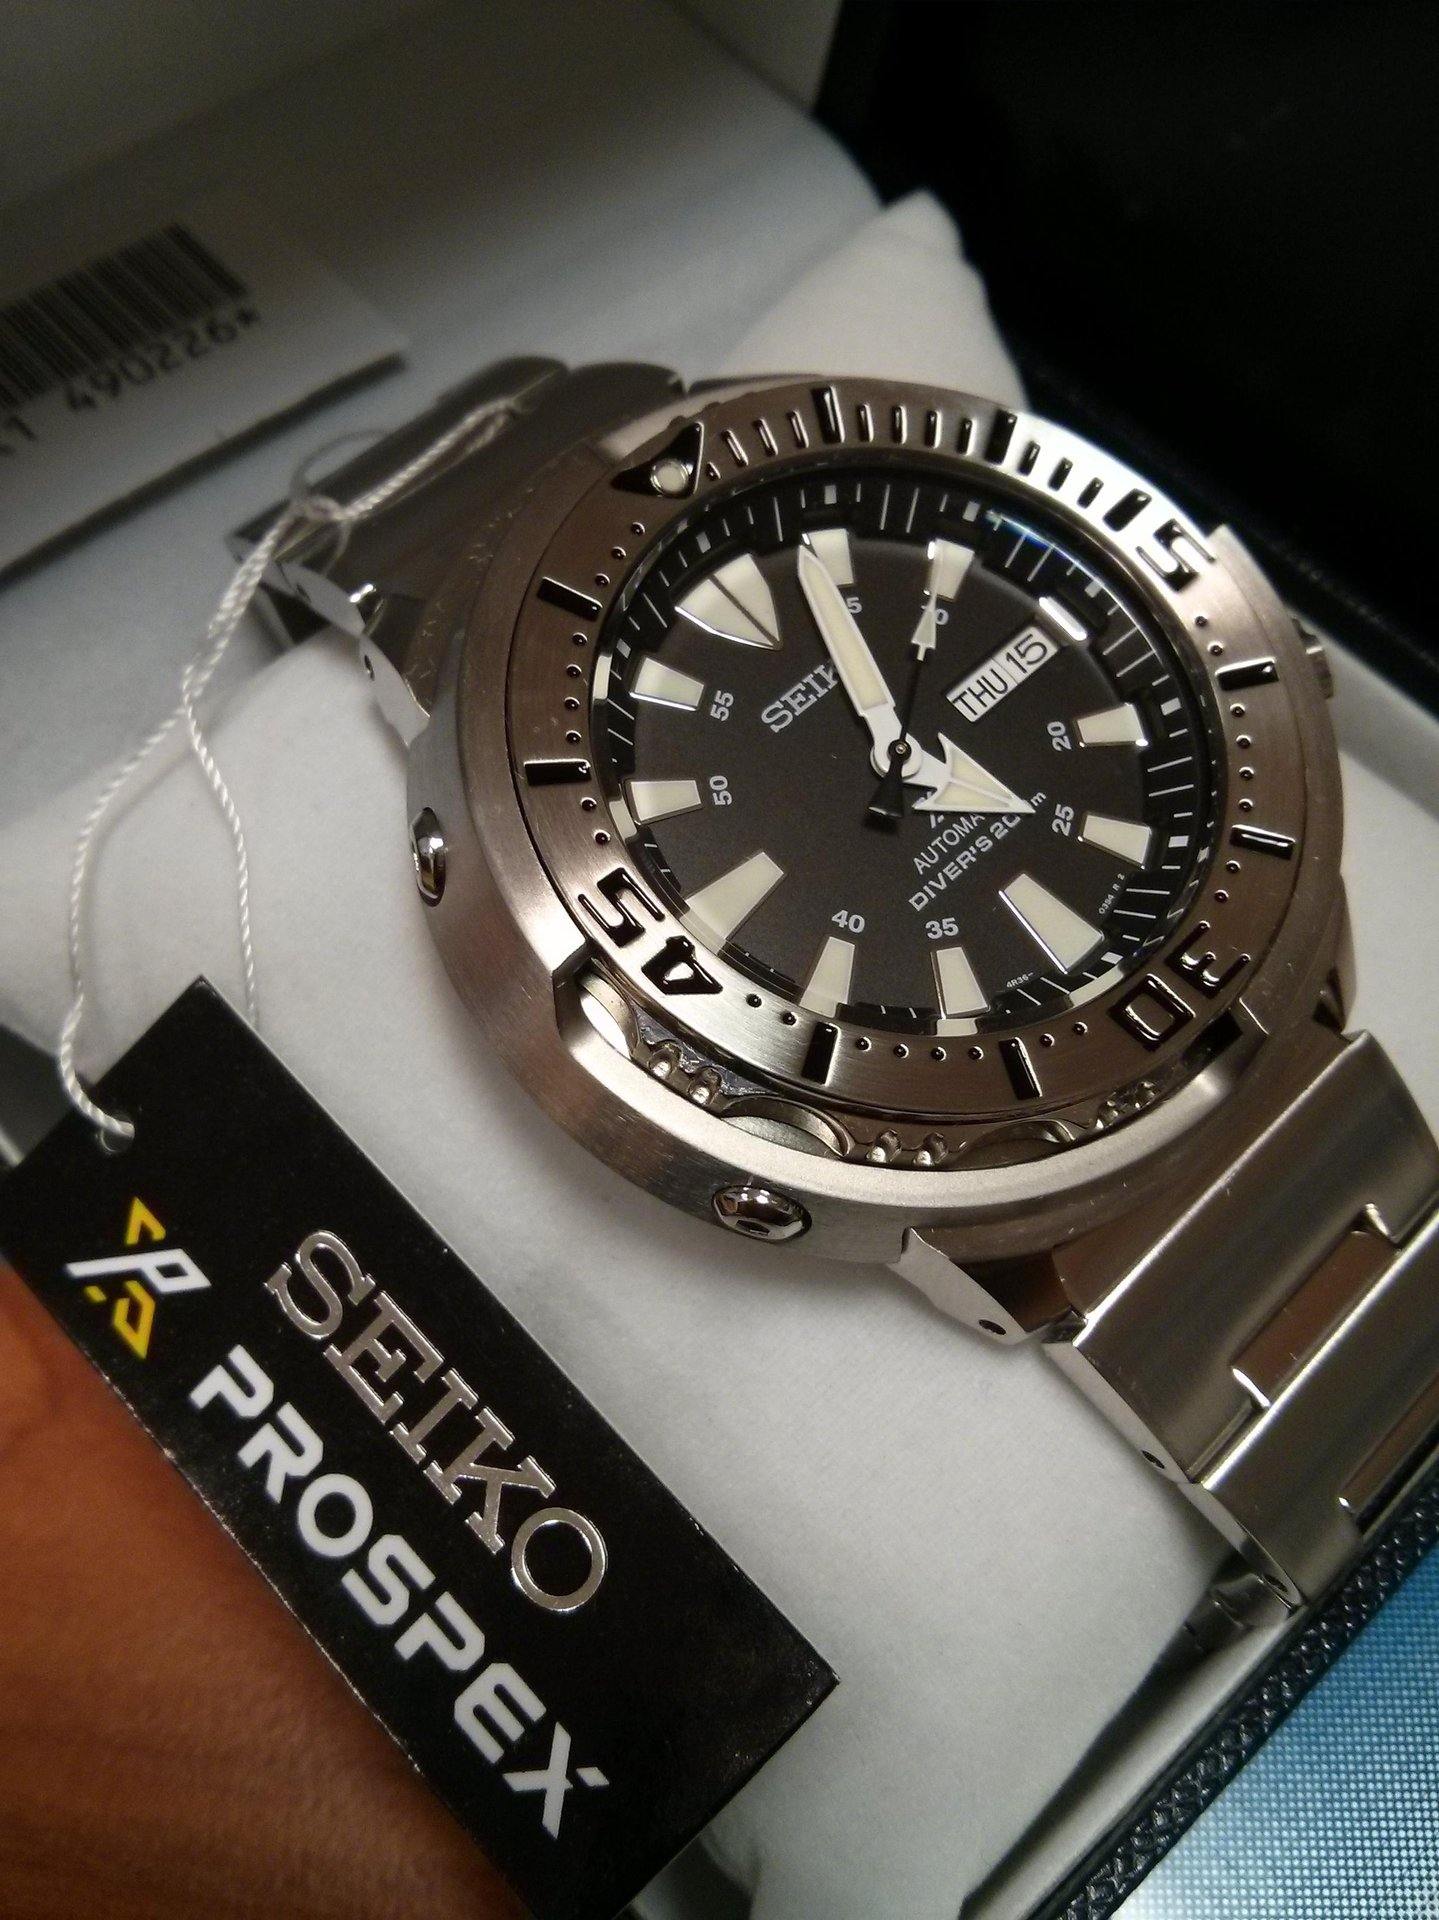 Seiko Black Monster Baby Tuna Prospex Men's Stainless Steel Watch SRP637K1 - Prestige